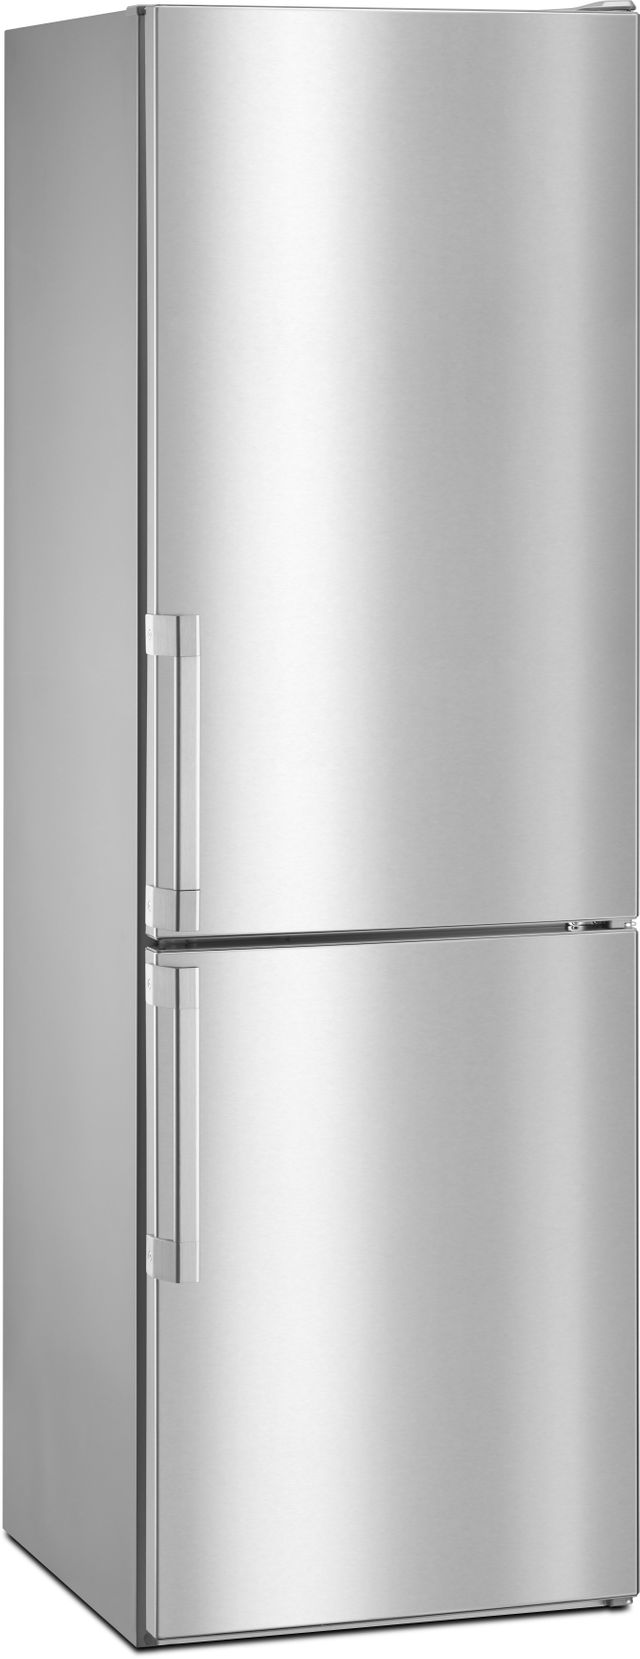 Whirlpool® 11.3 Cu. Ft. Fingerprint Resistant Stainless Steel Counter Depth Bottom Mount Refrigerator 1